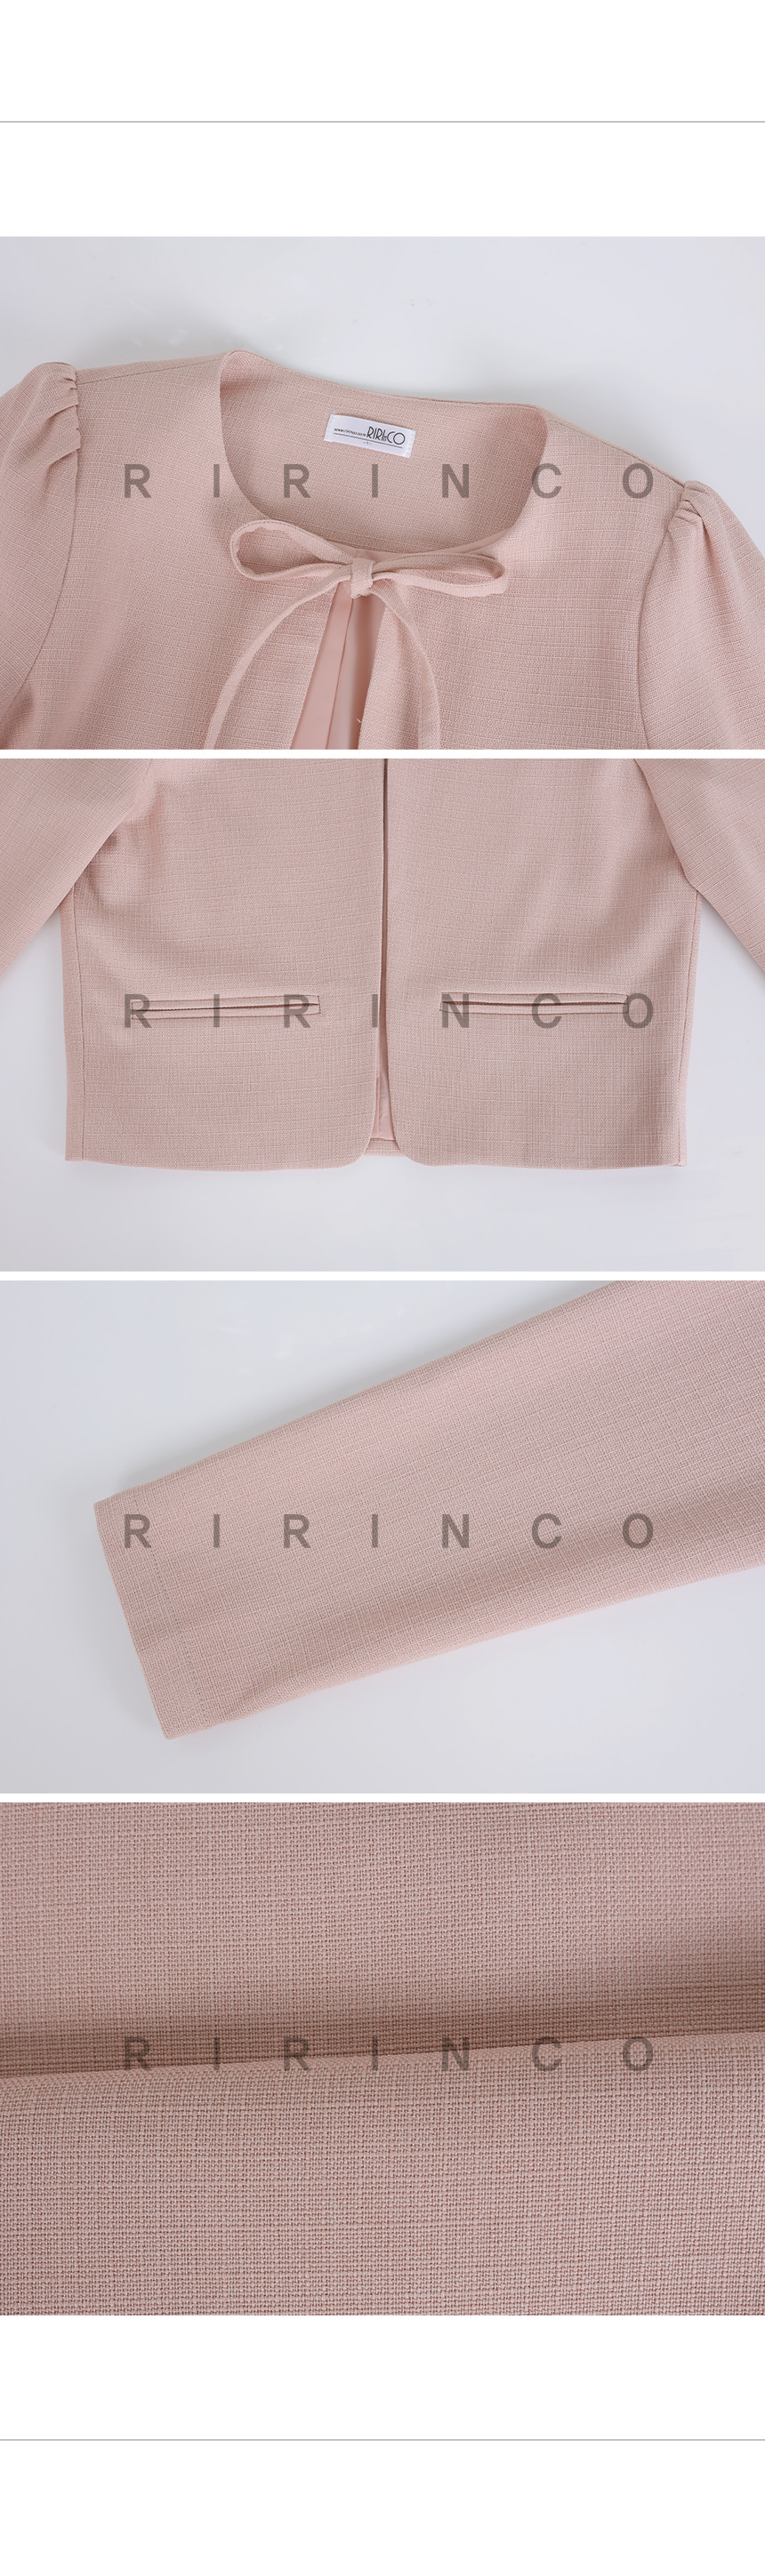 RIRINCO ラウンドネックリボンストラップクロップドジャケット